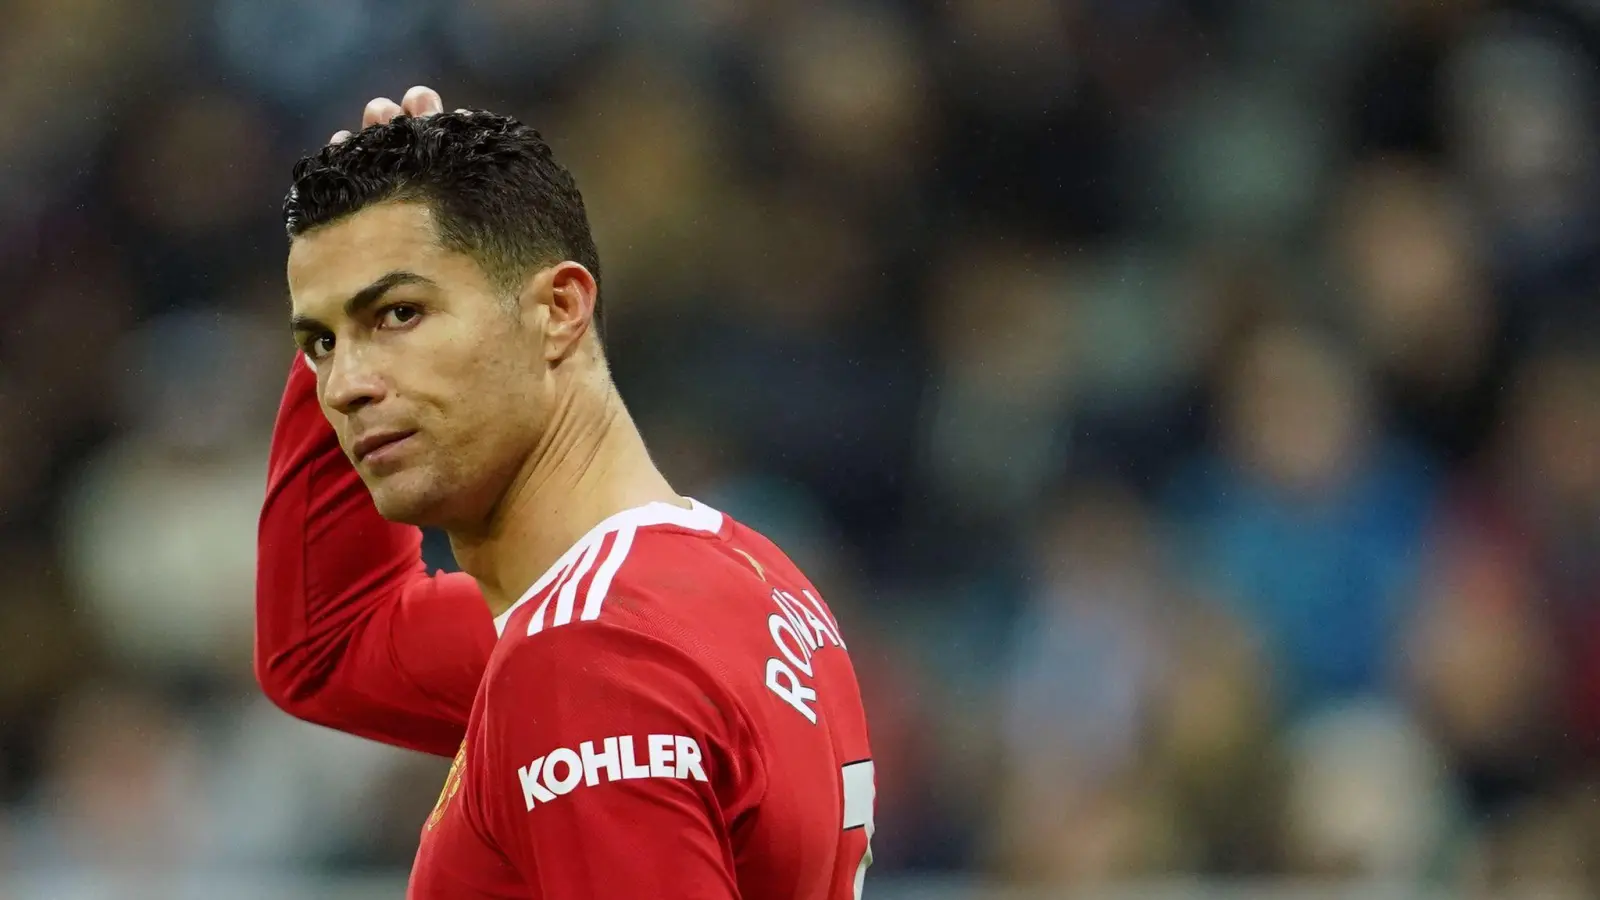 Teilt gegen Manchester United ordentlich aus: Cristiano Ronaldo. (Foto: Jon Super/AP/dpa)